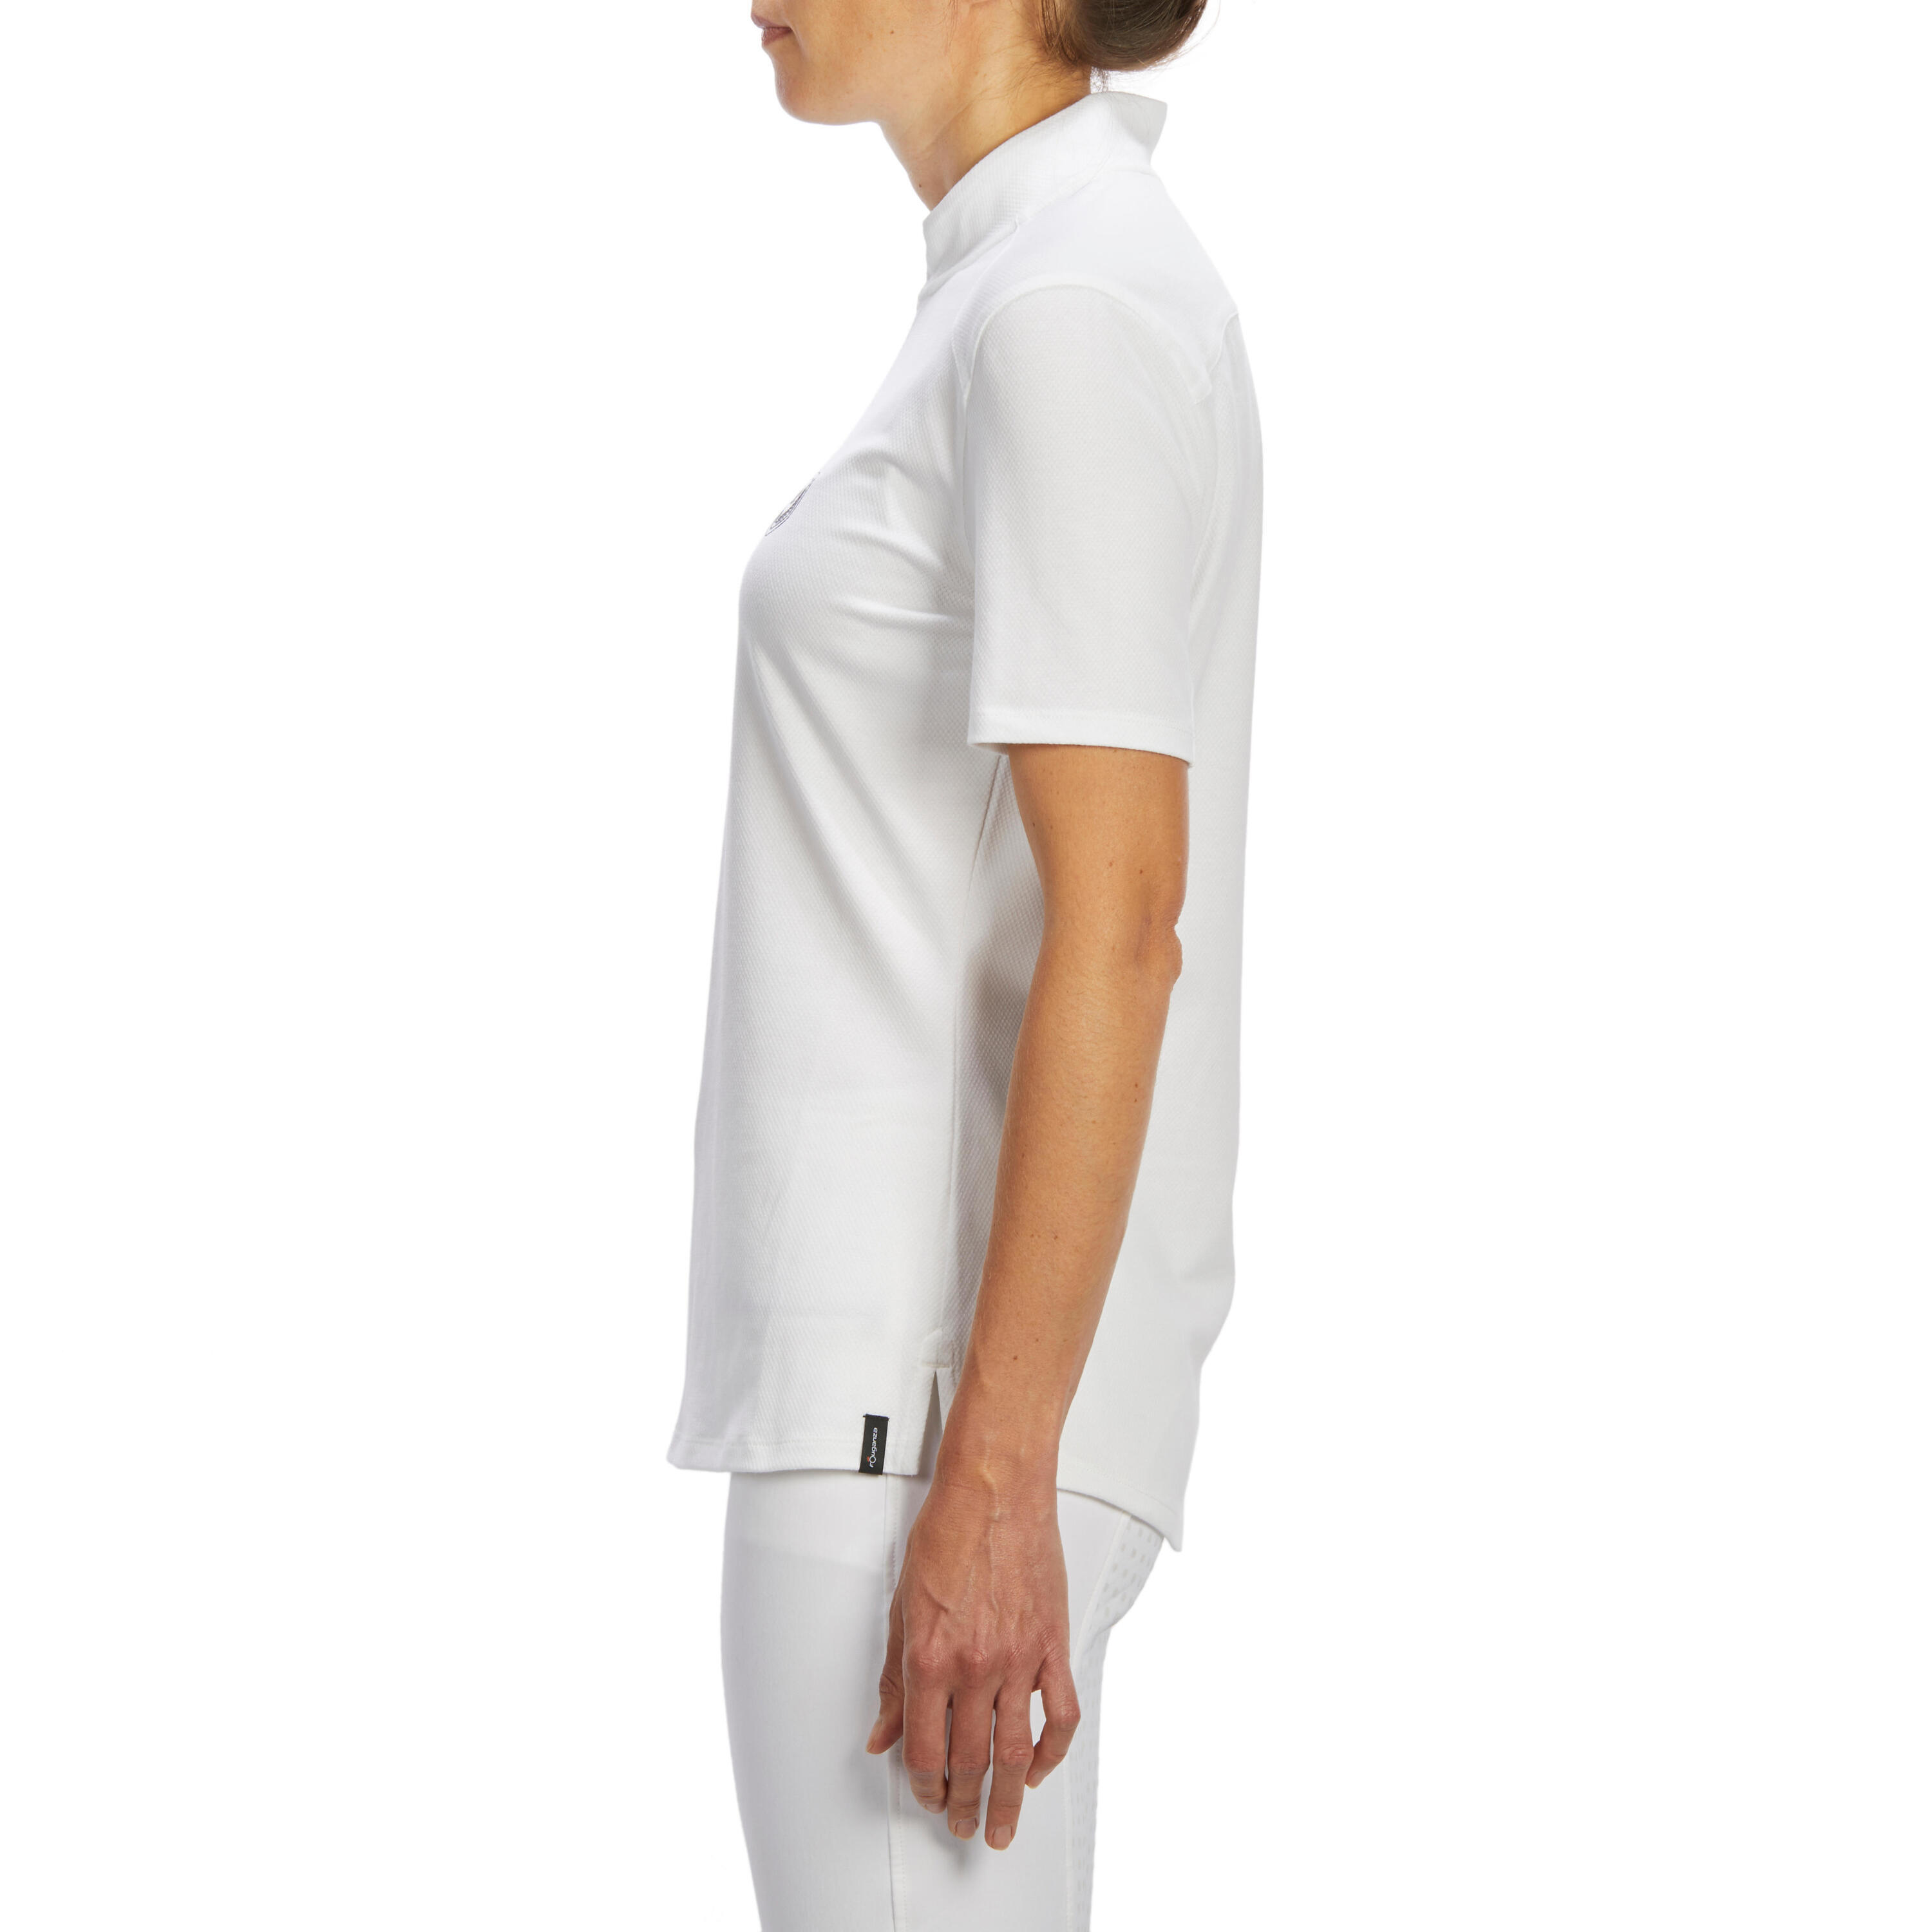 Refurbished Womens Short-Sleeved Polo Shirt - White - A Grade 7/7